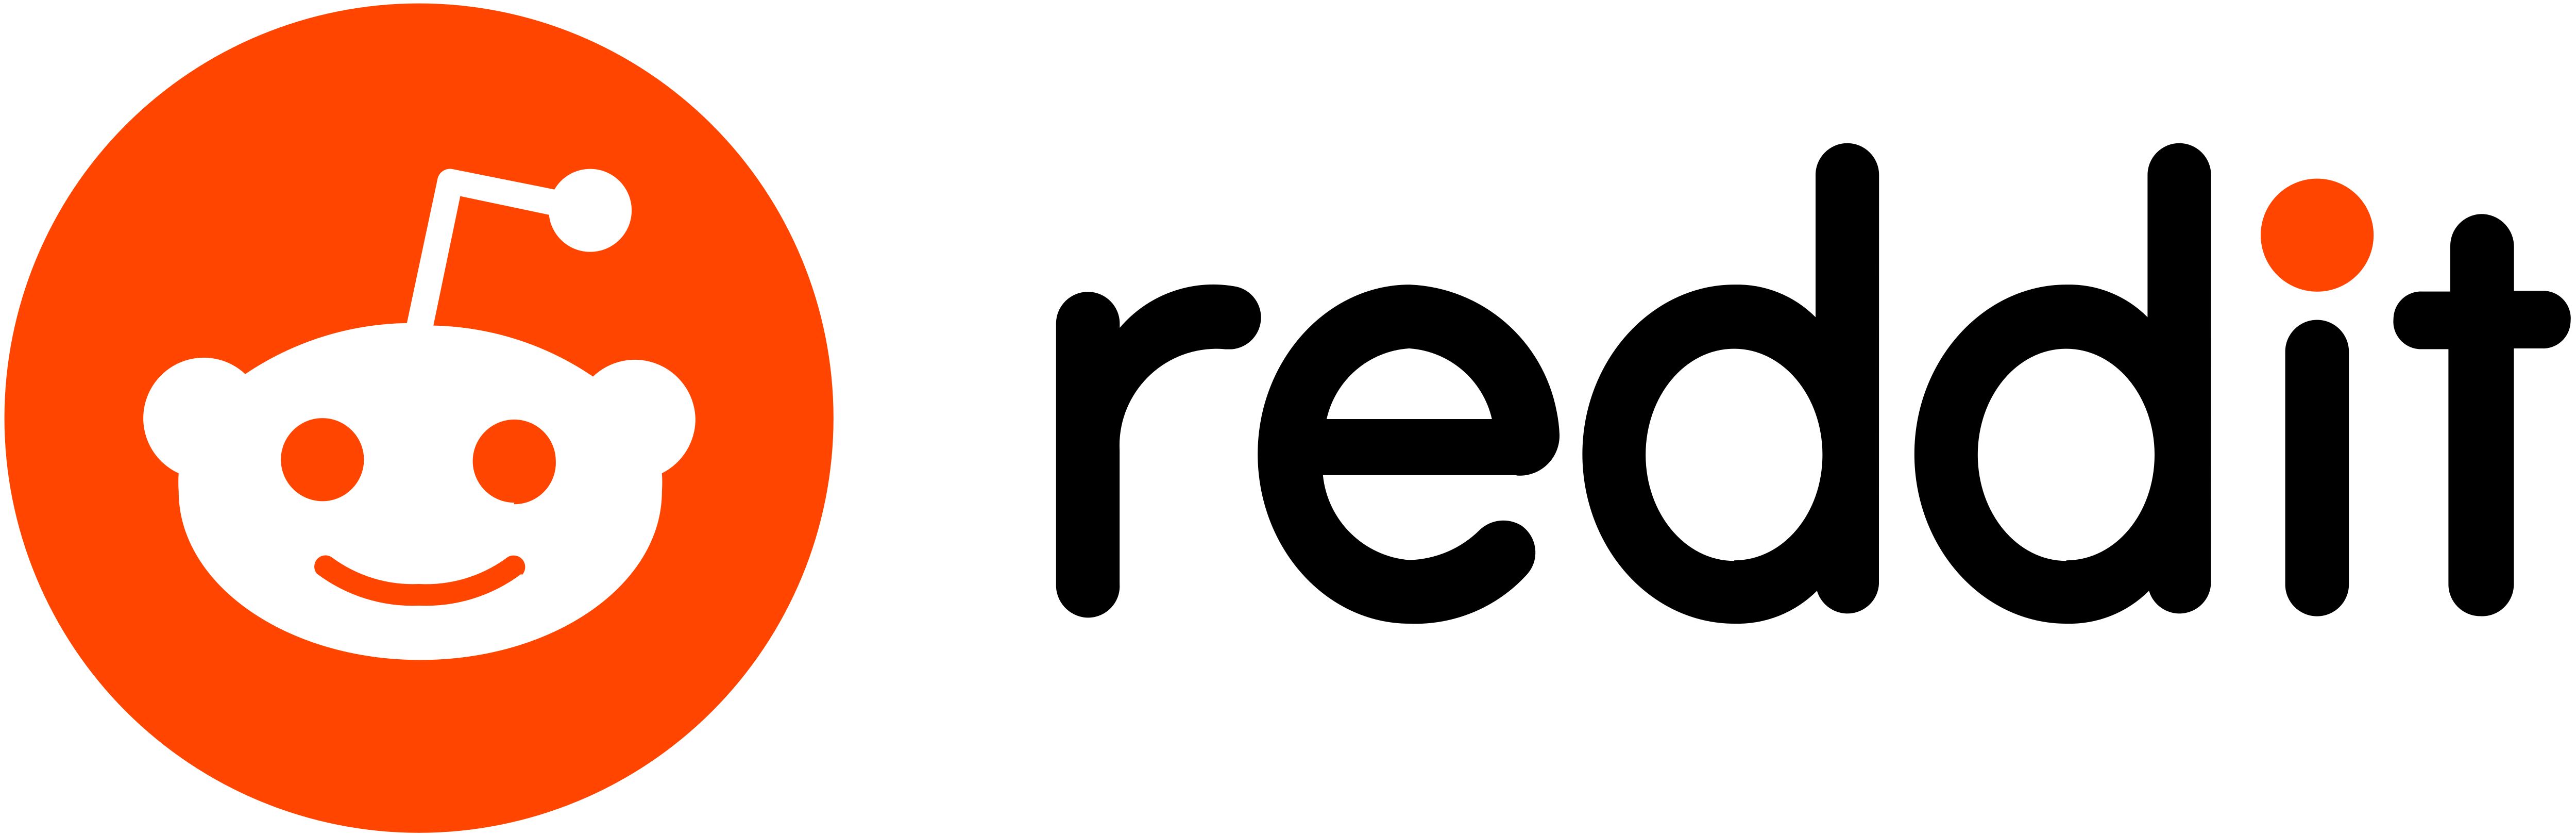 Redddit Logo